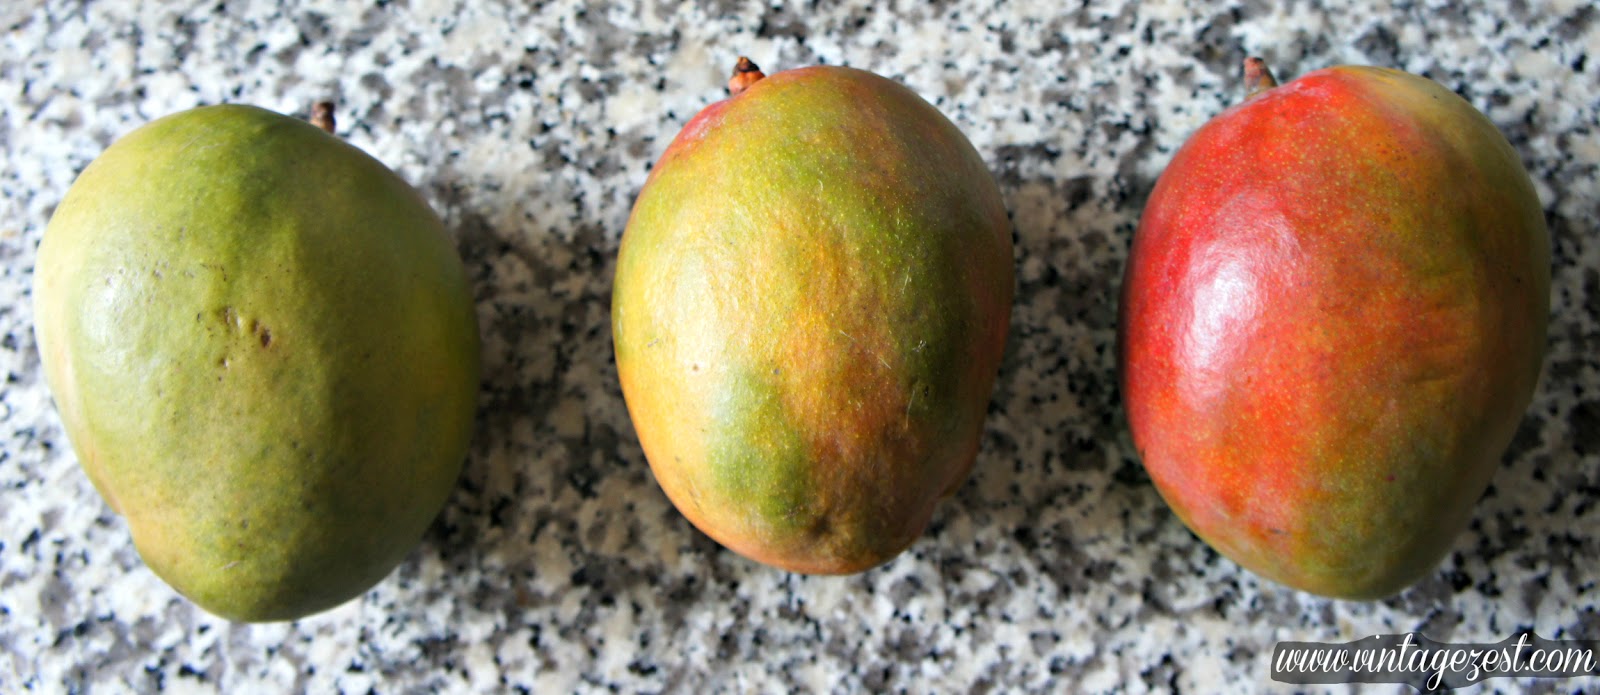 Diane's Vintage Zest!: Kitchen Basics: How to Pick & Prep Produce -  Tropical Fruit Edition!